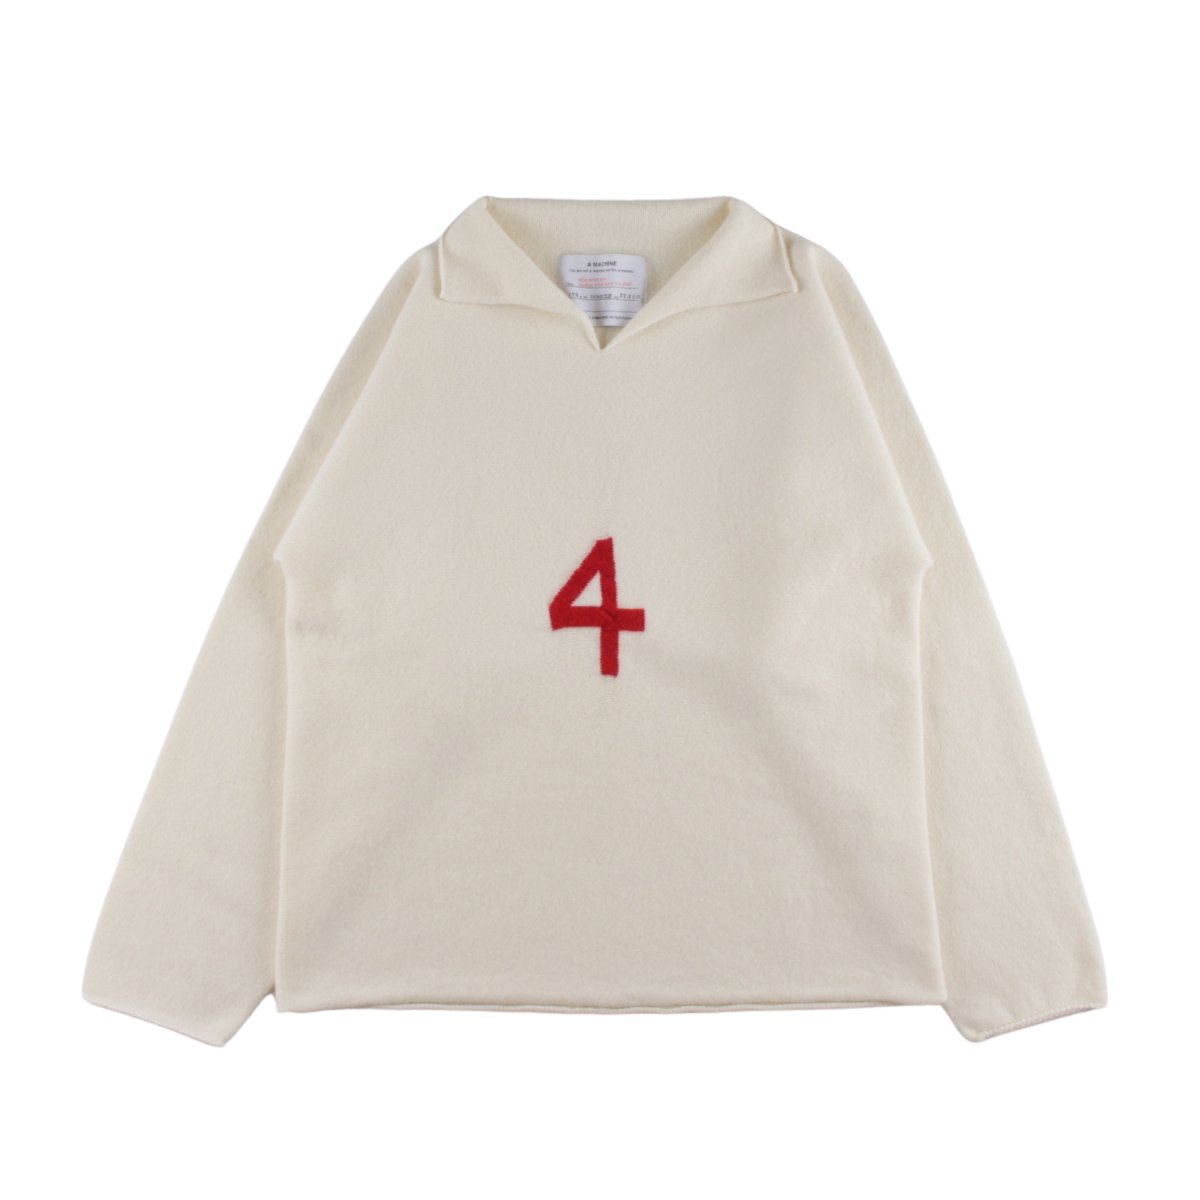 Minimum Conditions Sweater【Raw white】